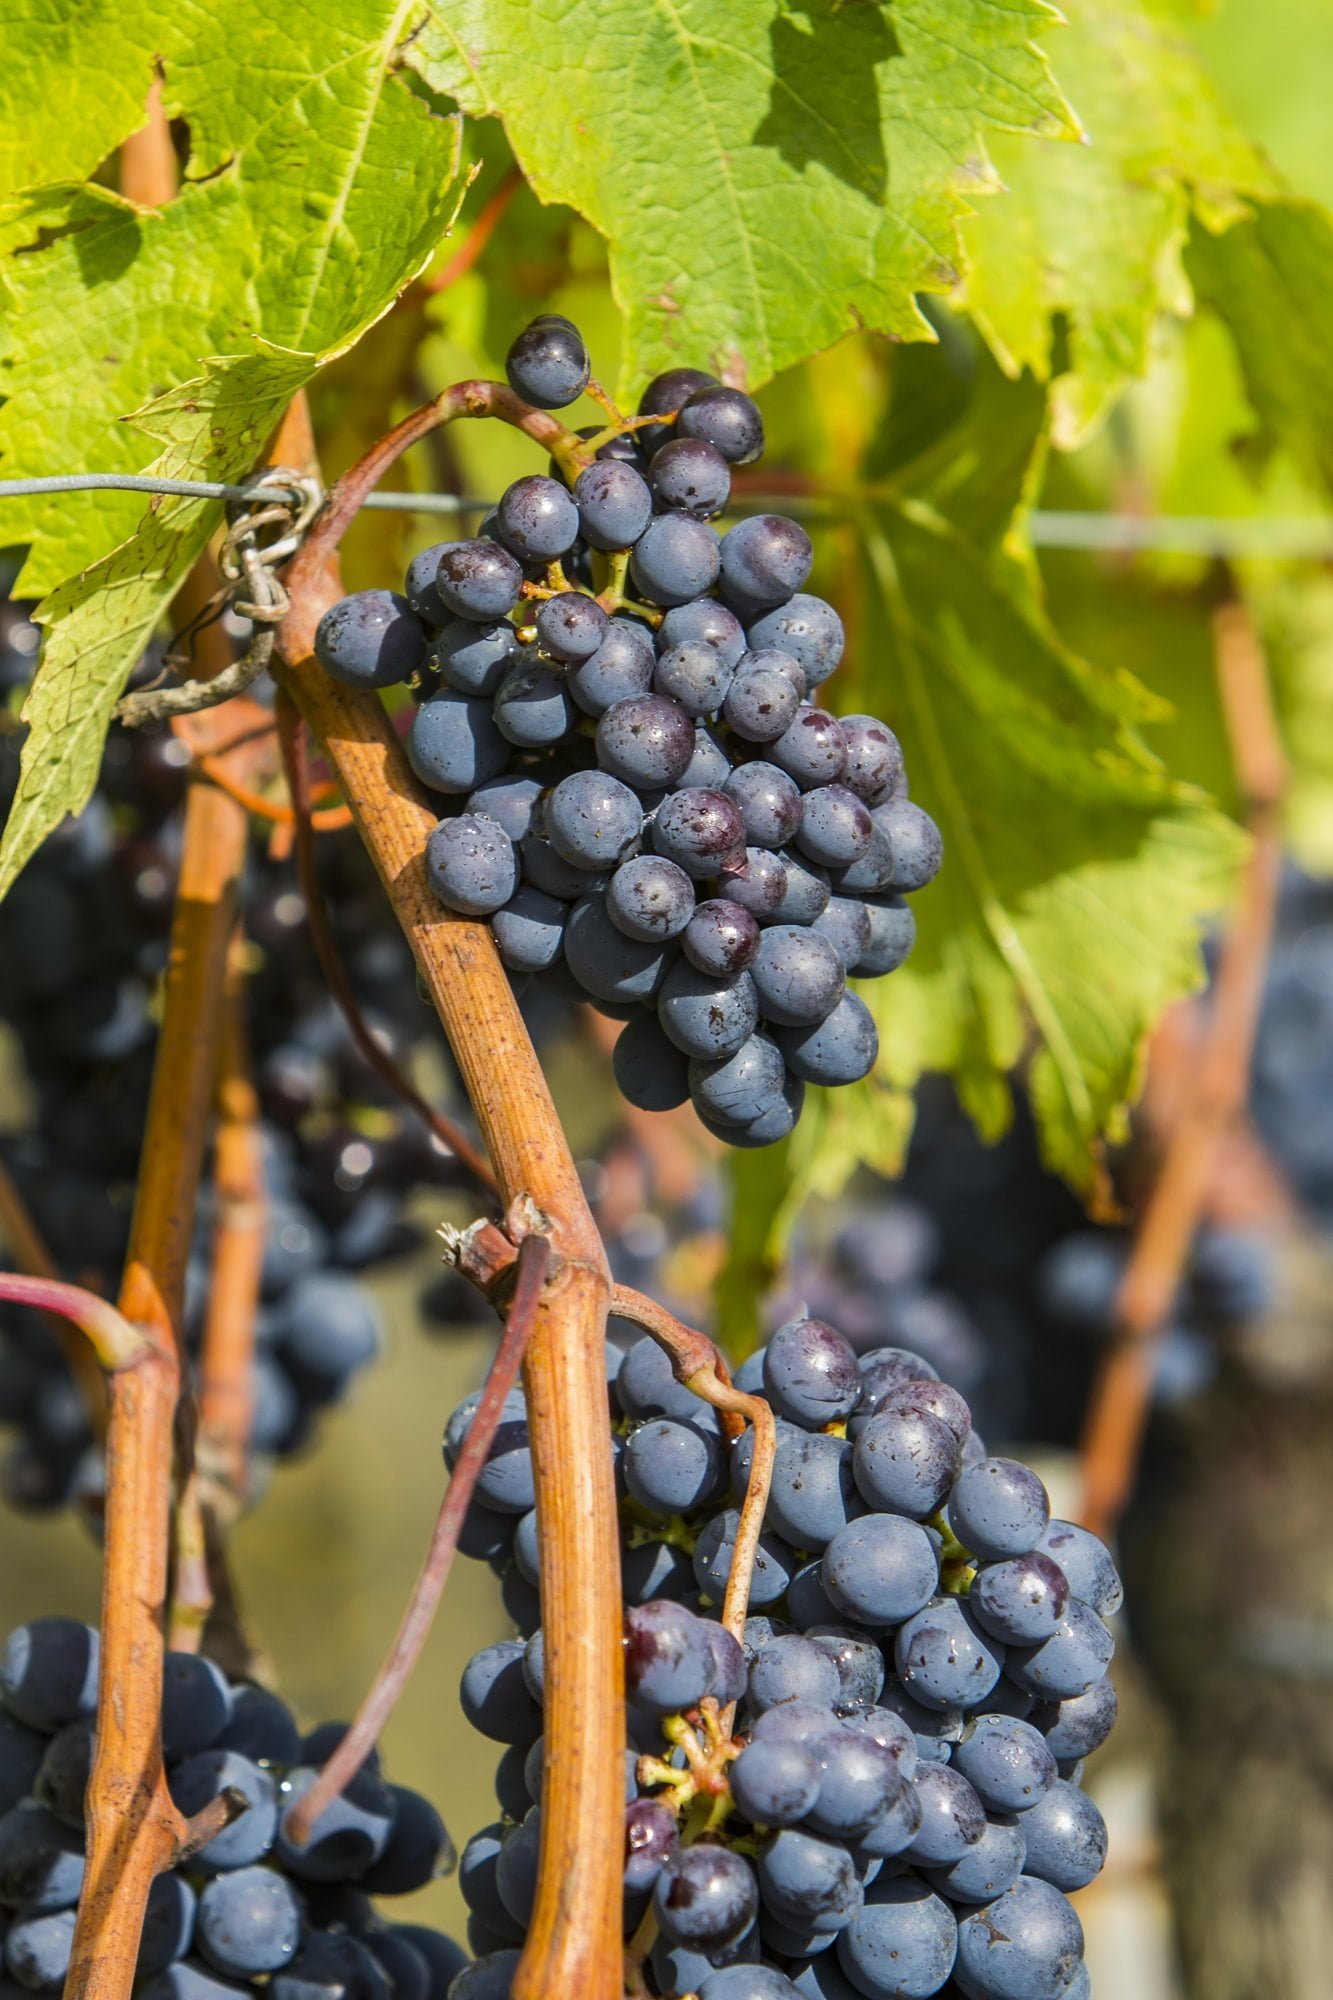 Sangiovese grapes in the Montalcino region of Tuscany, Italy